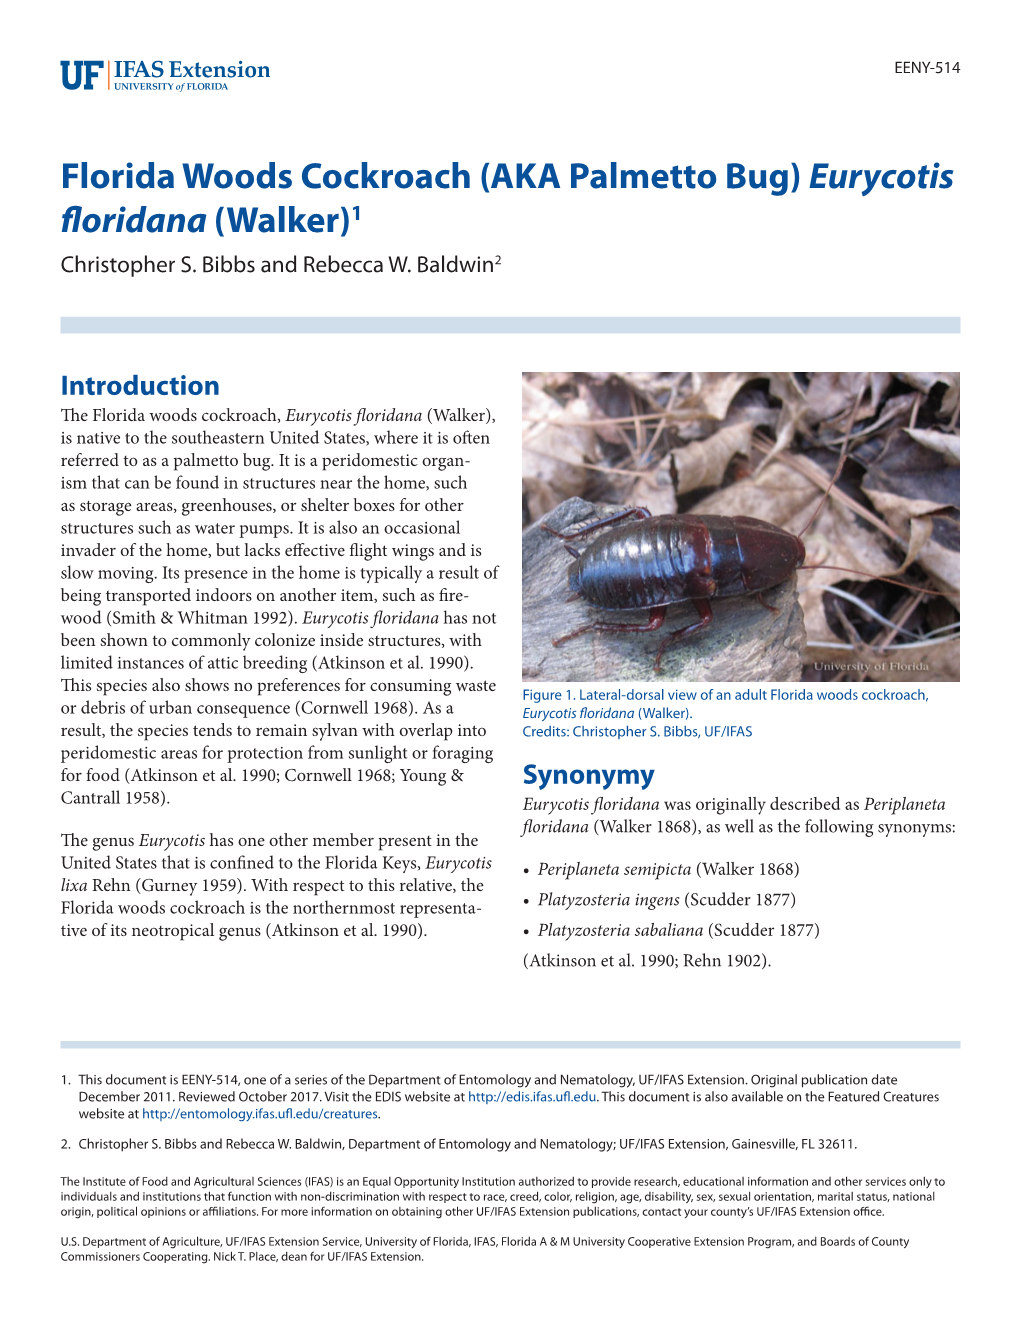 Florida Woods Cockroach (AKA Palmetto Bug) Eurycotis Floridana(Walker) 1 Christopher S